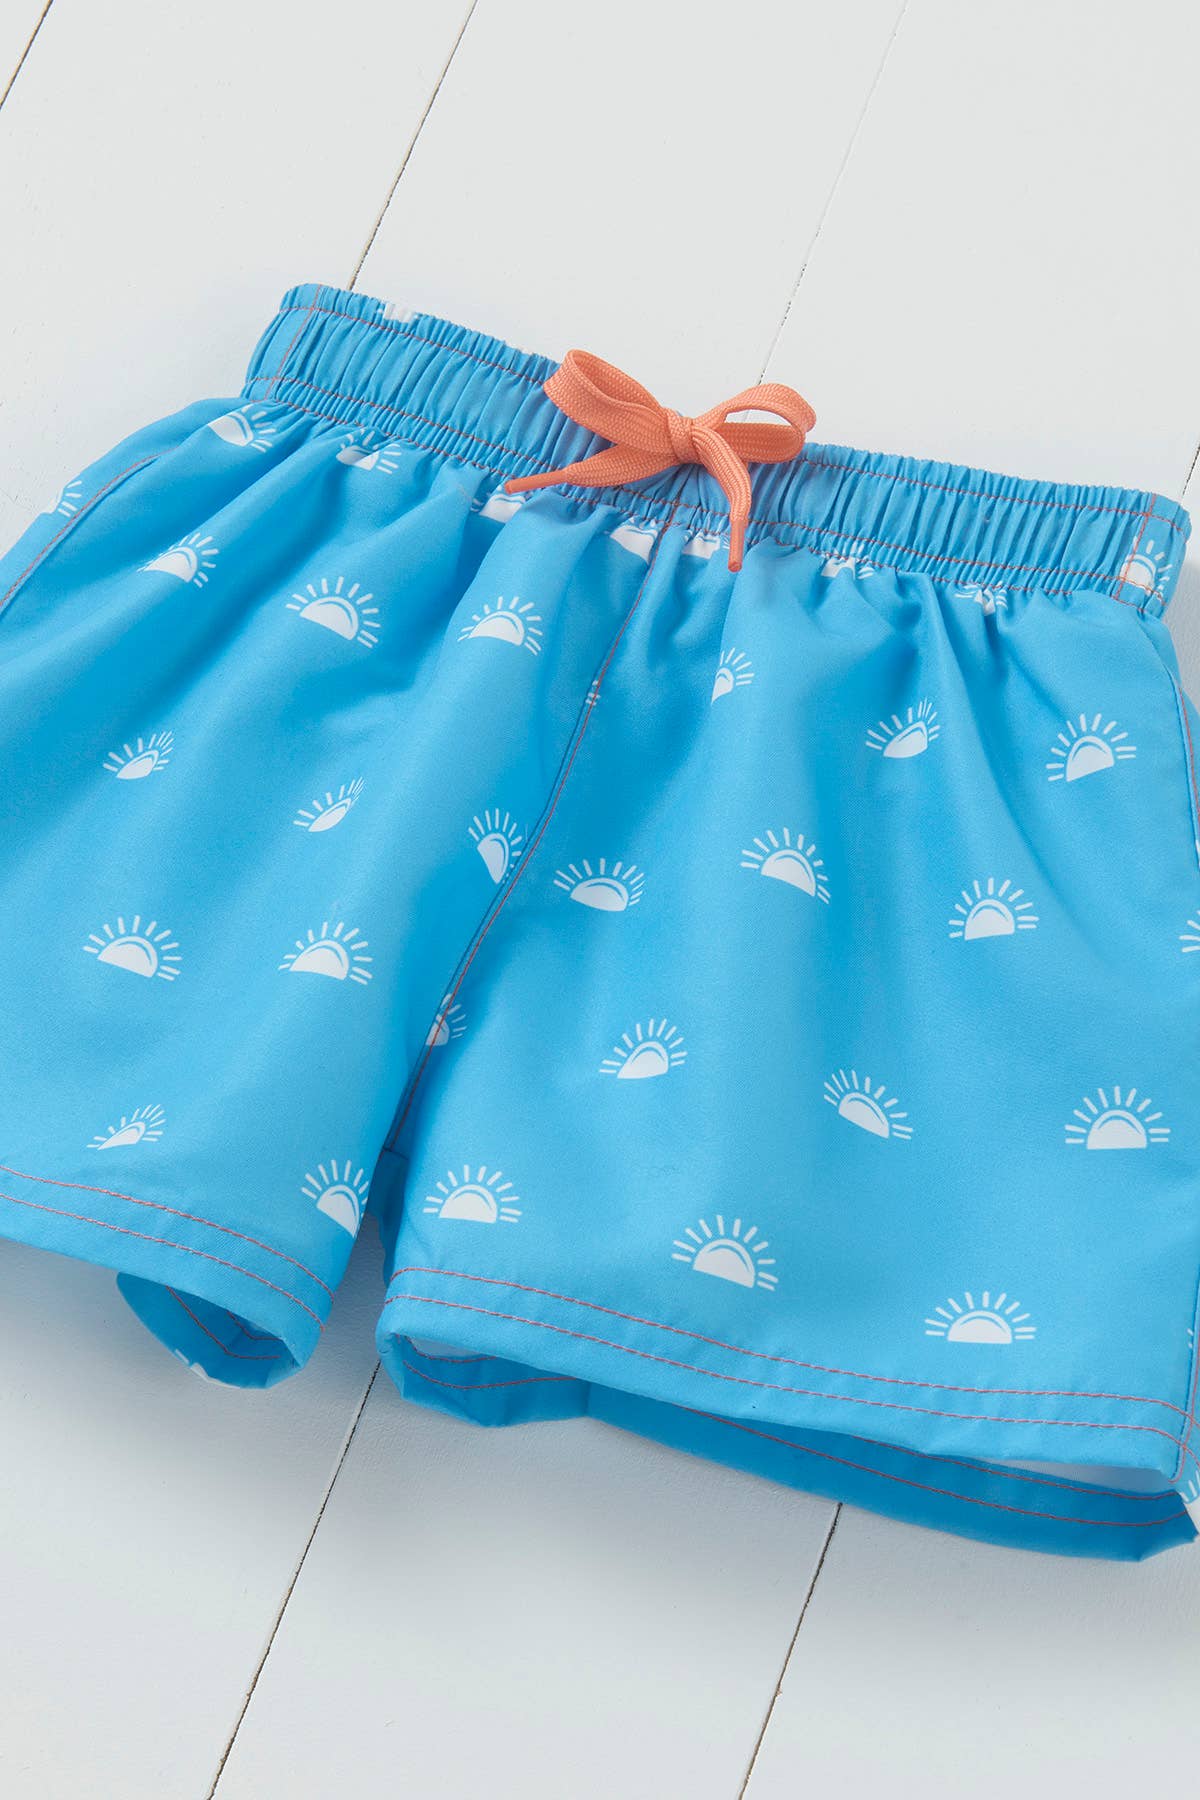 Grass & Air - Cornflower Blue Swim Shorts